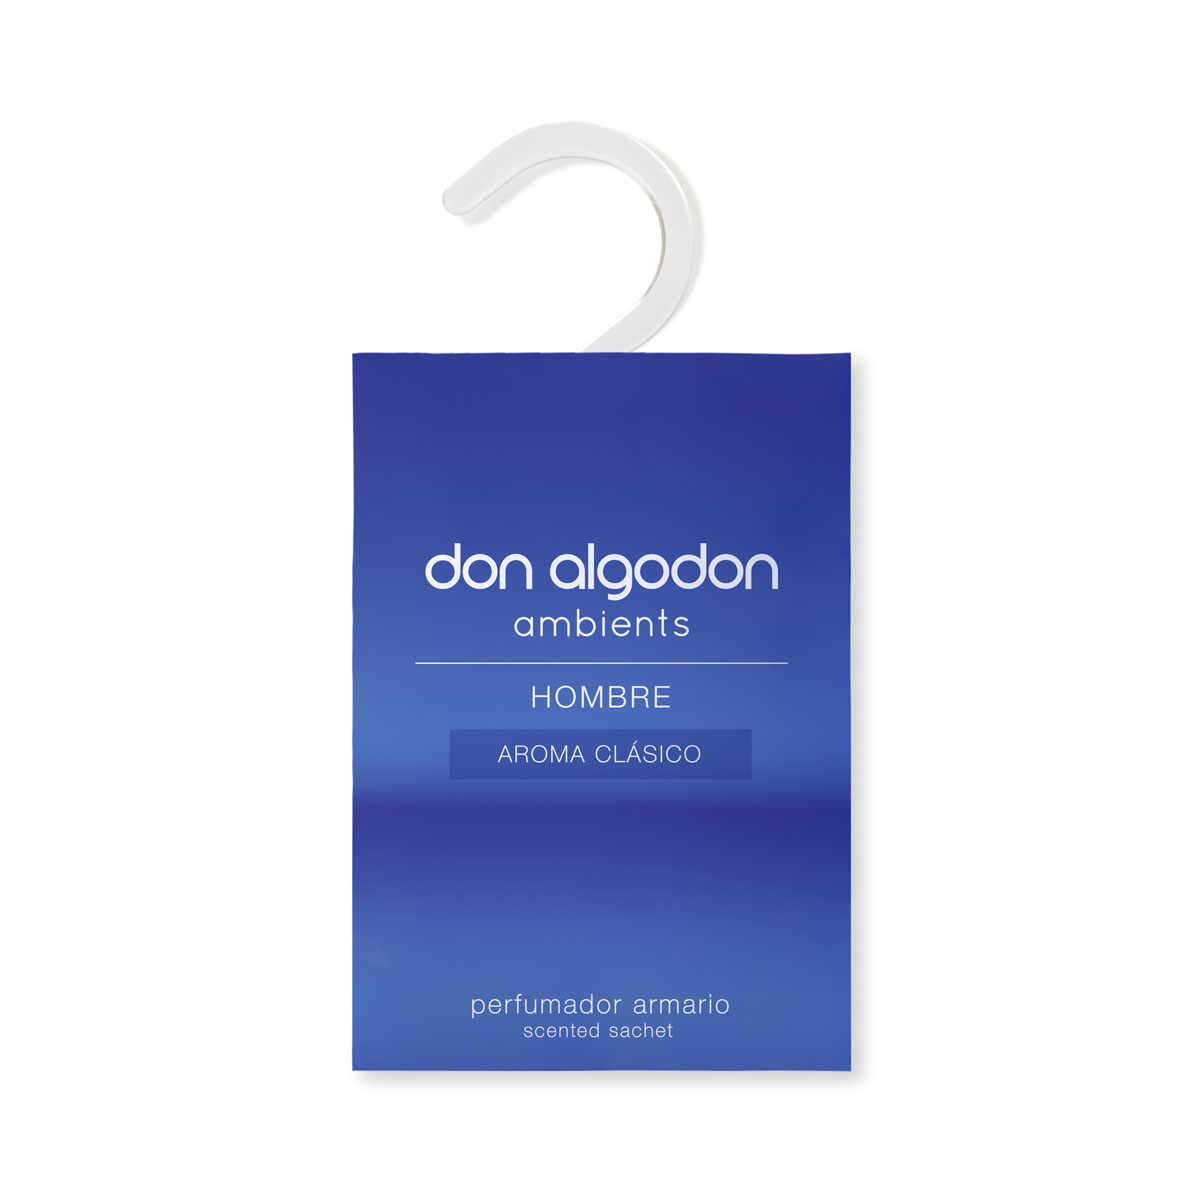 Don Algodon Ambients archivos - Don Algodon Aromas